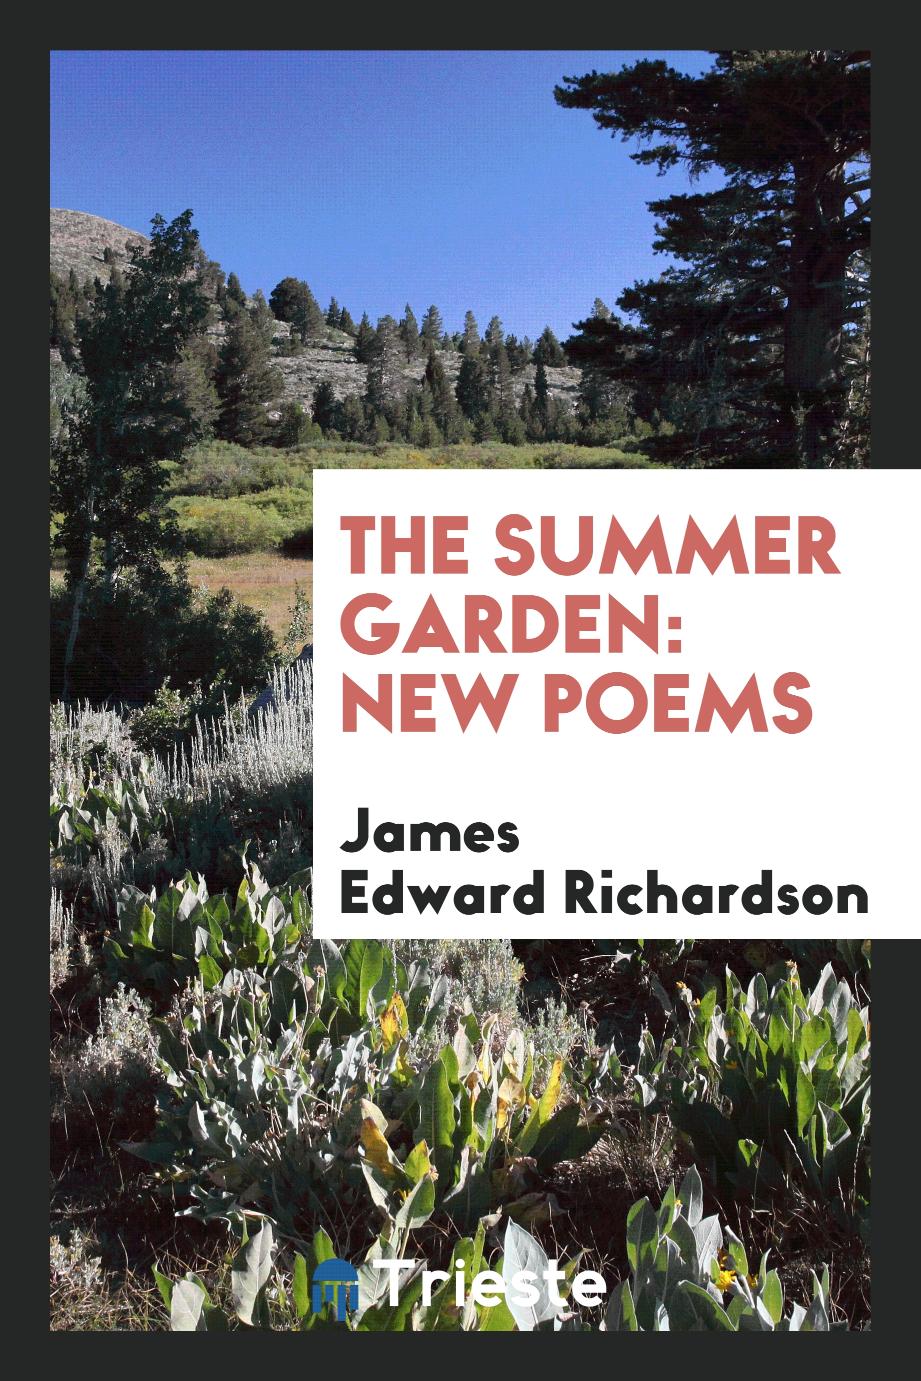 The summer garden: new poems